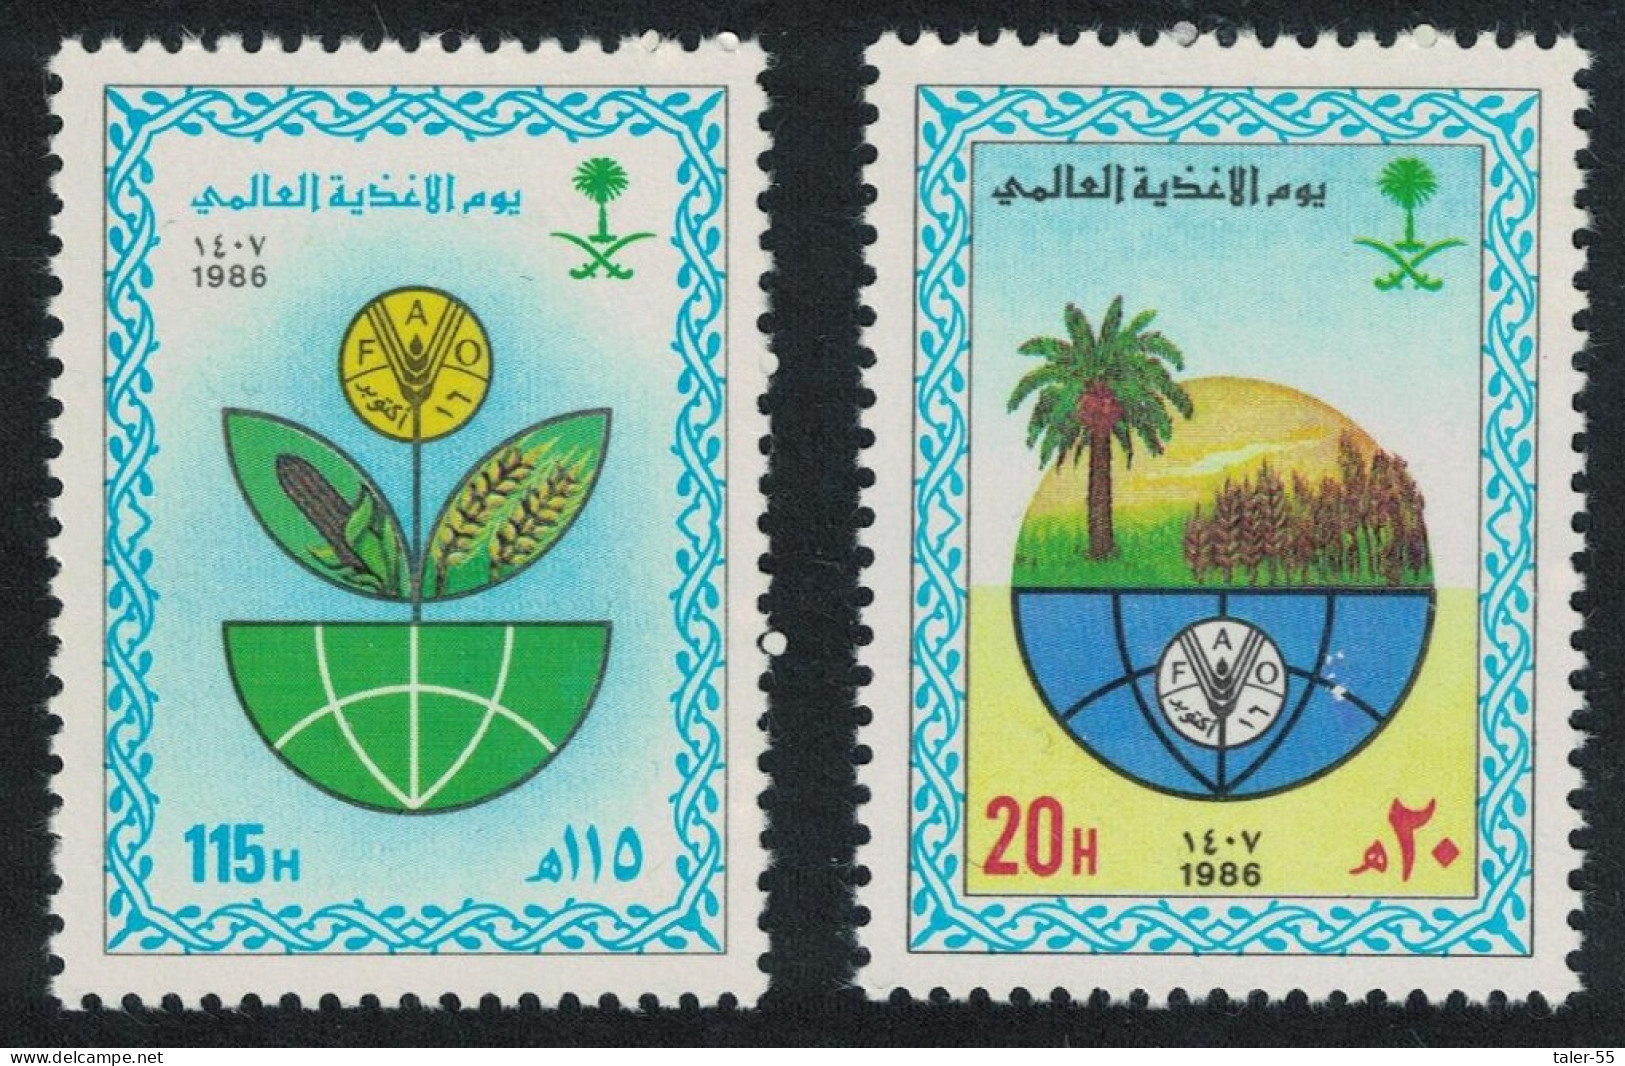 Saudi Arabia World Food Day 2v 1986 MNH SG#1470-1471 MI#857-858 Sc#1005-1006 - Saudi Arabia